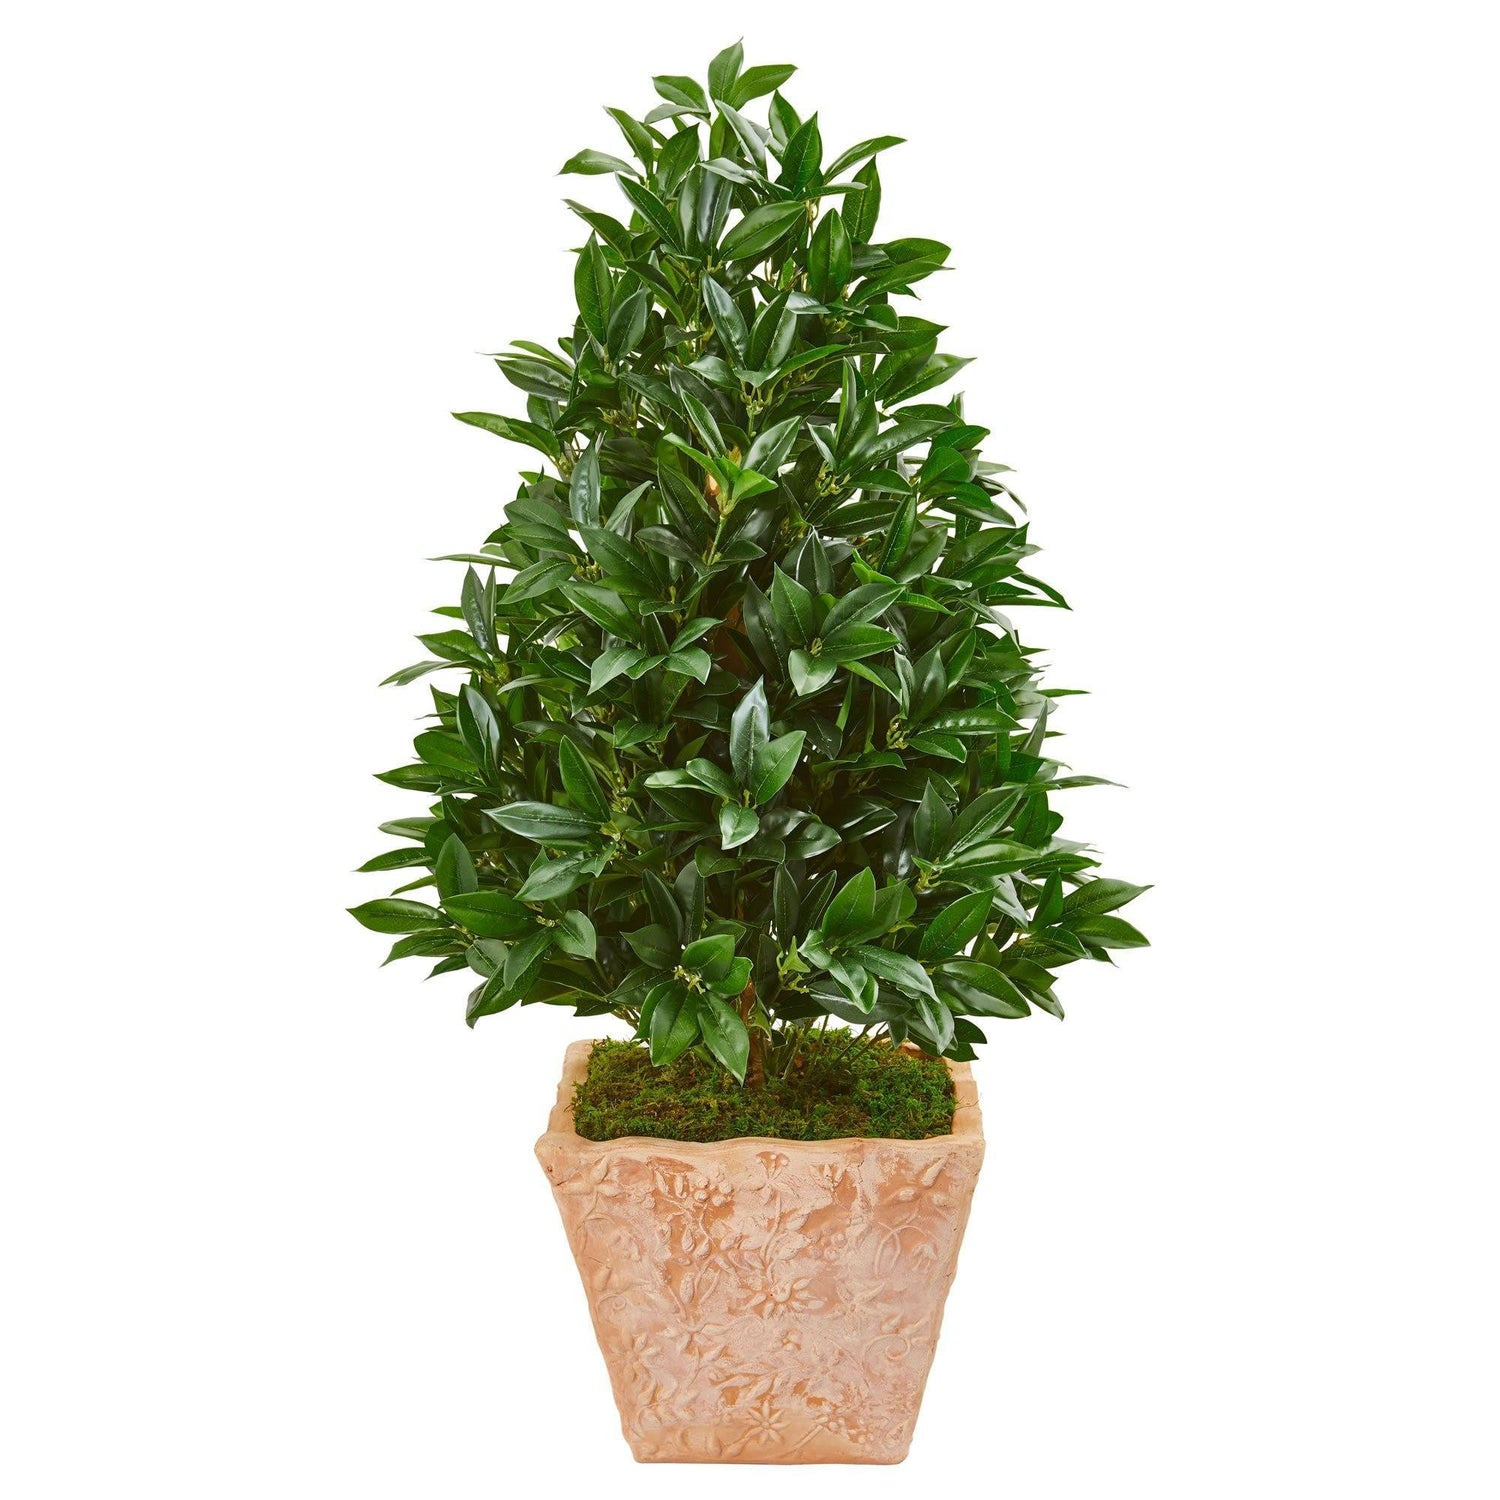 39” Bay Leaf Cone Topiary Artificial Tree in Terra Cotta Planter(Indoor/Outdoor)